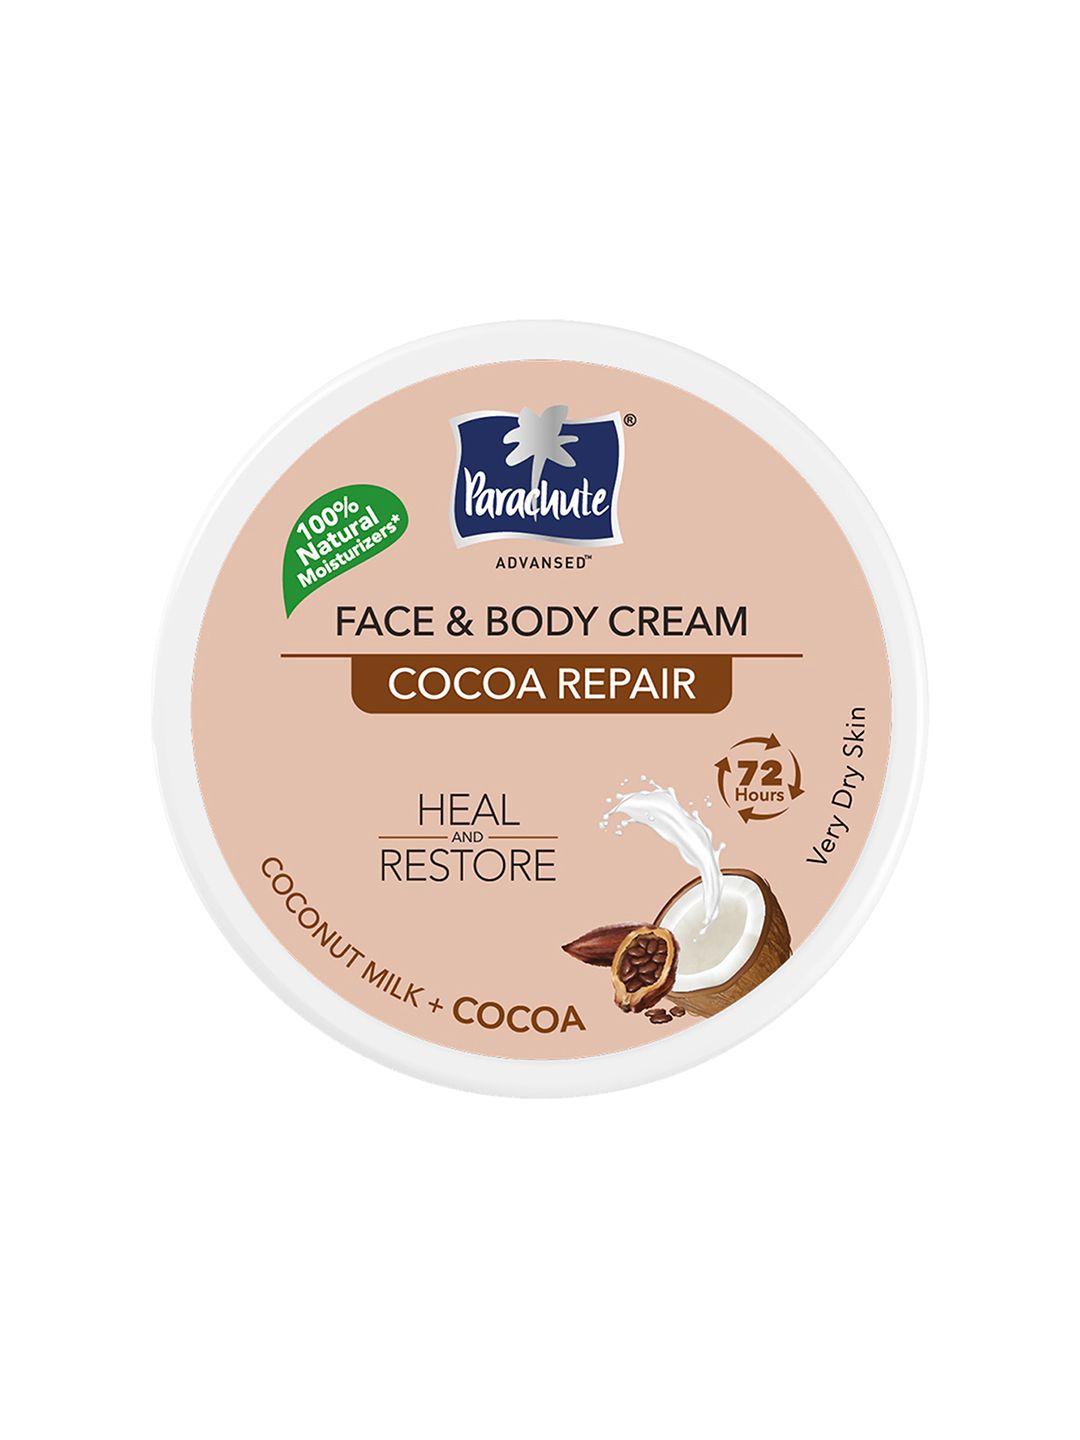 parachute advansed cocoa repair face & body cream moisturiser for very dry skin - 280ml